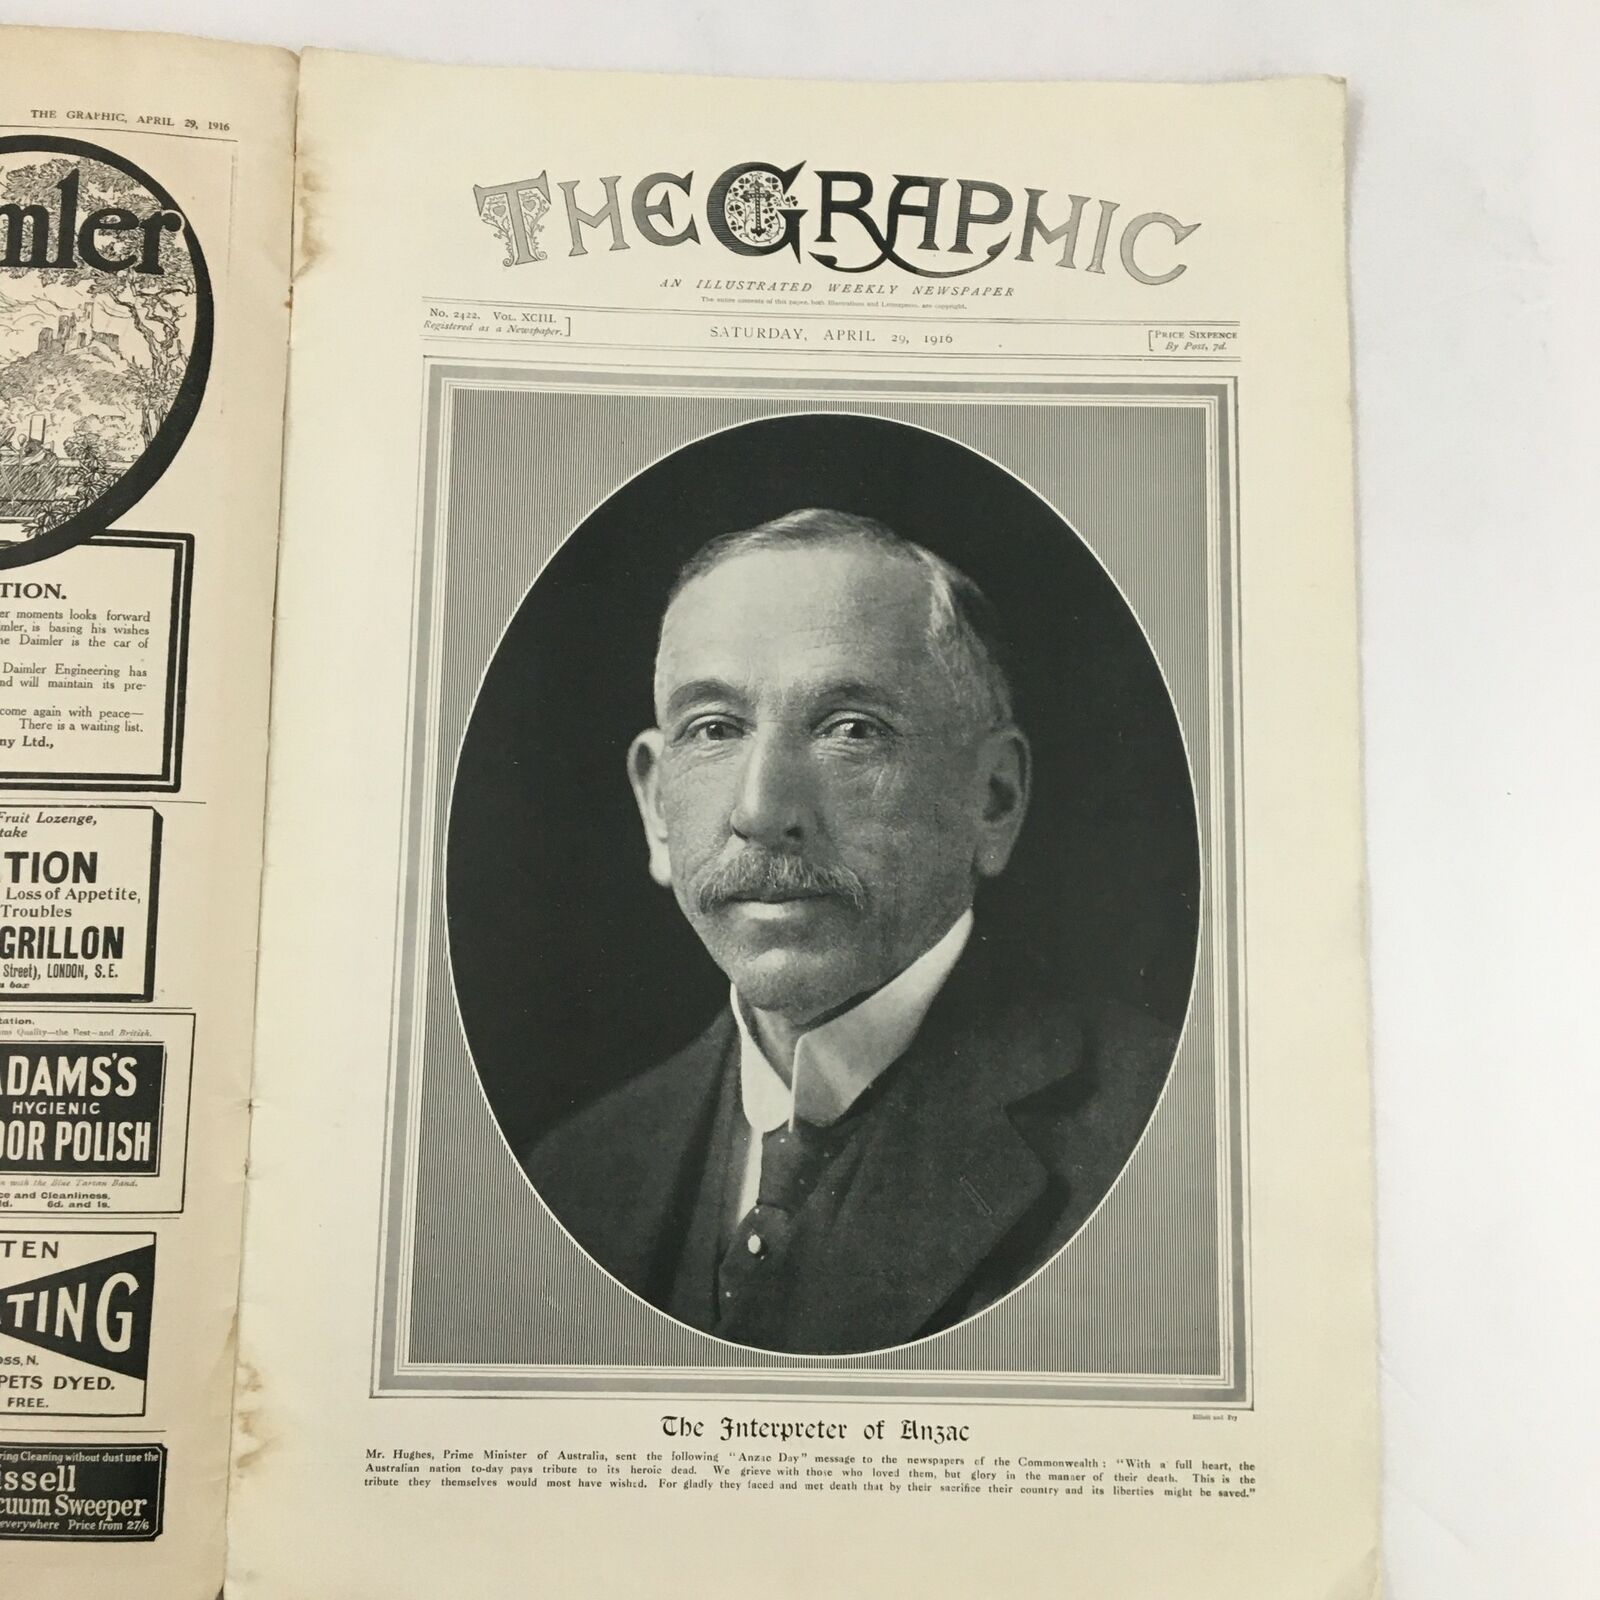 VTG The Graphic Newspaper April 29 1916 Mr. Hughes Prime Minister of Australia